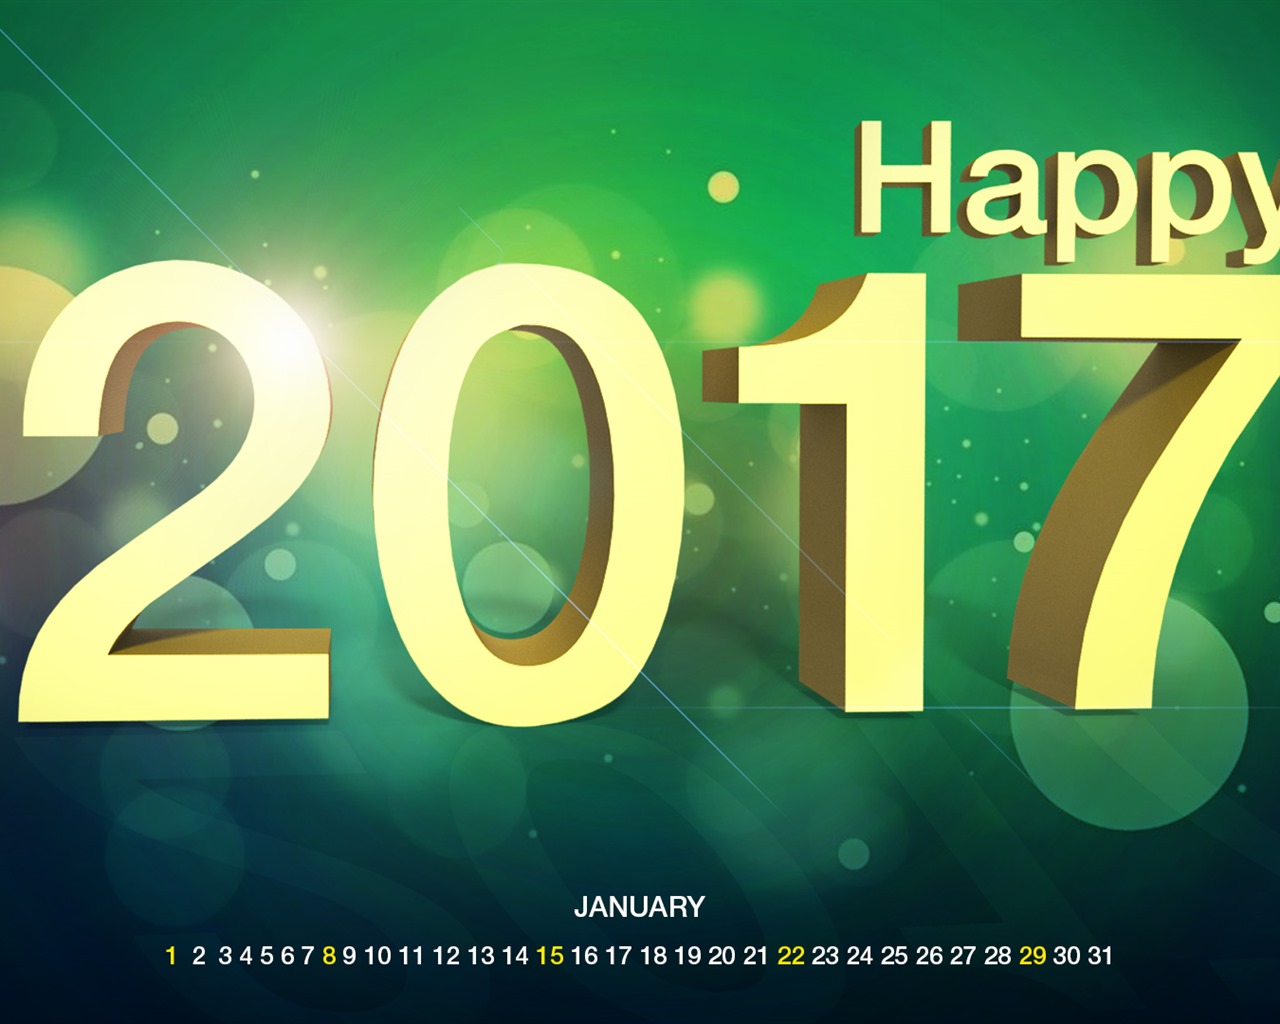 Fondos de calendario de enero de 2017 (2) #1 - 1280x1024